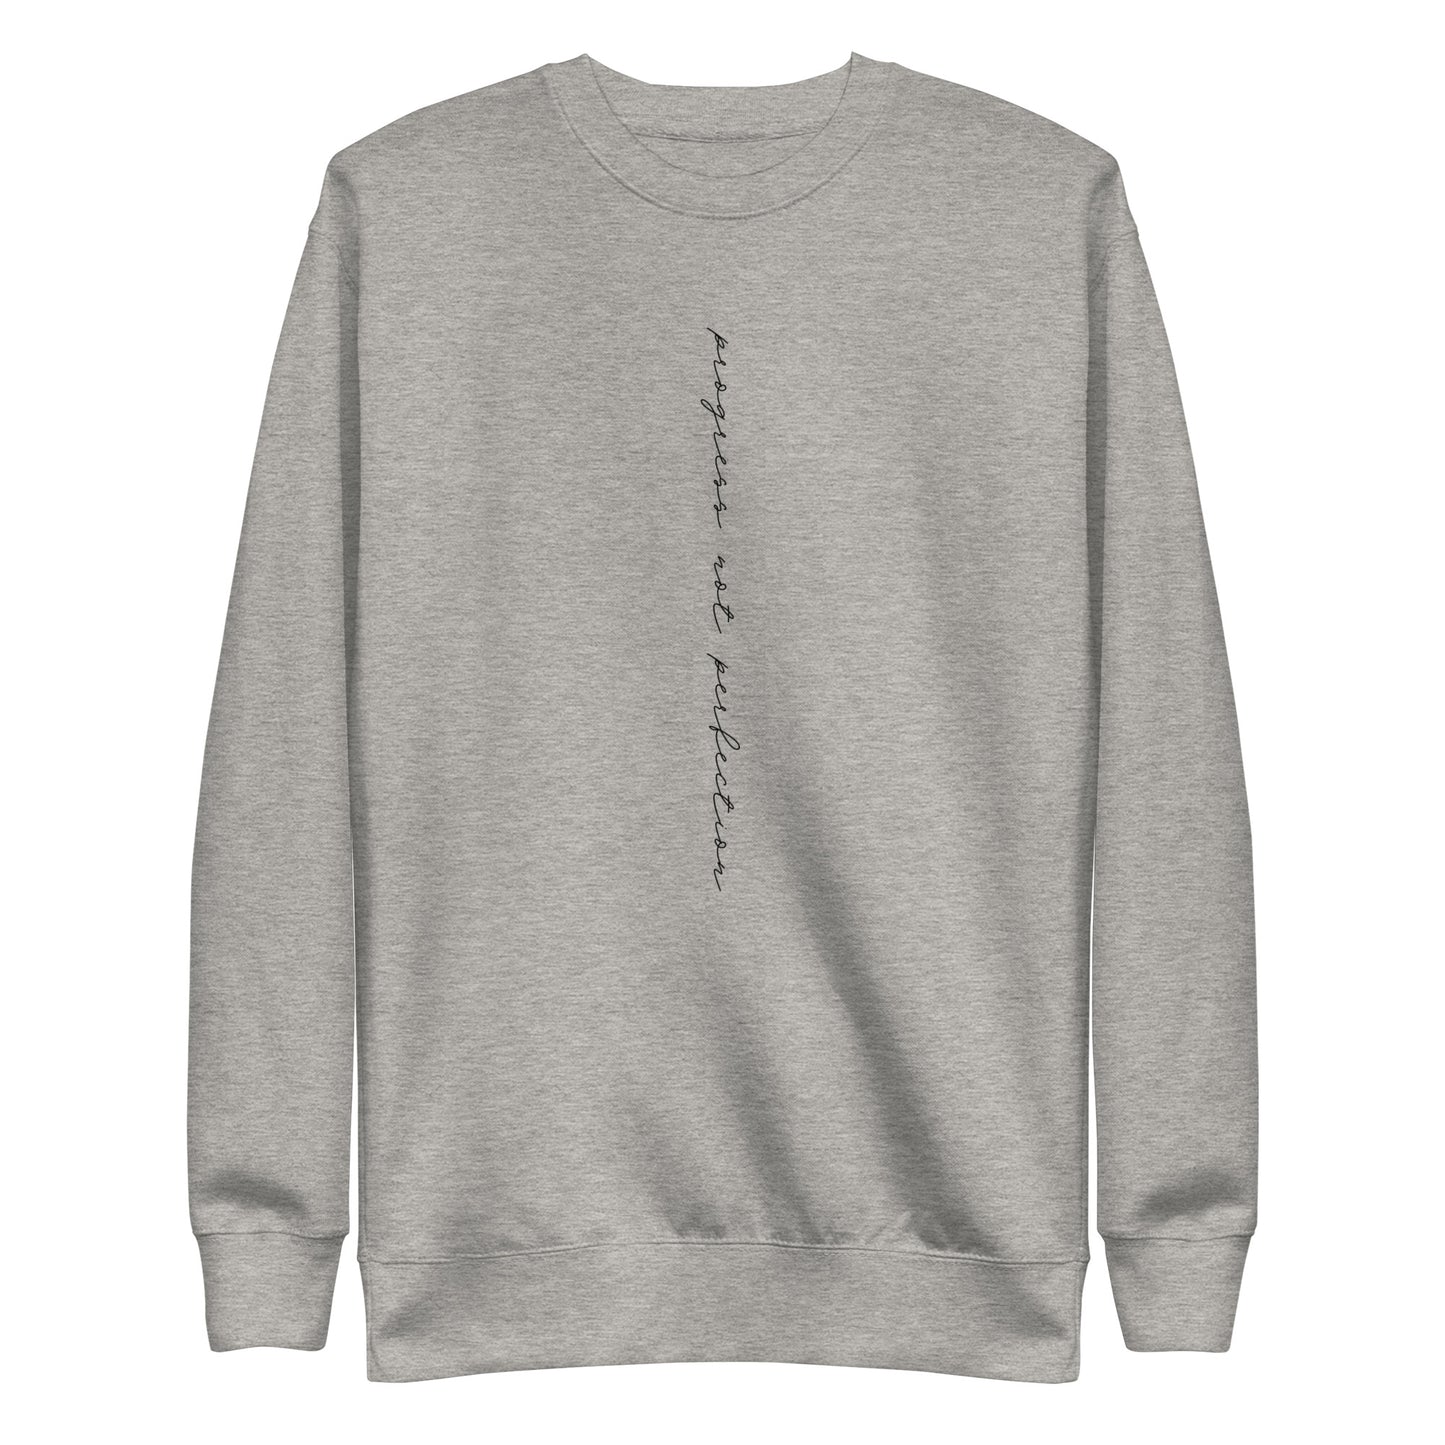 Progress not perfection Unisex Premium Sweatshirt